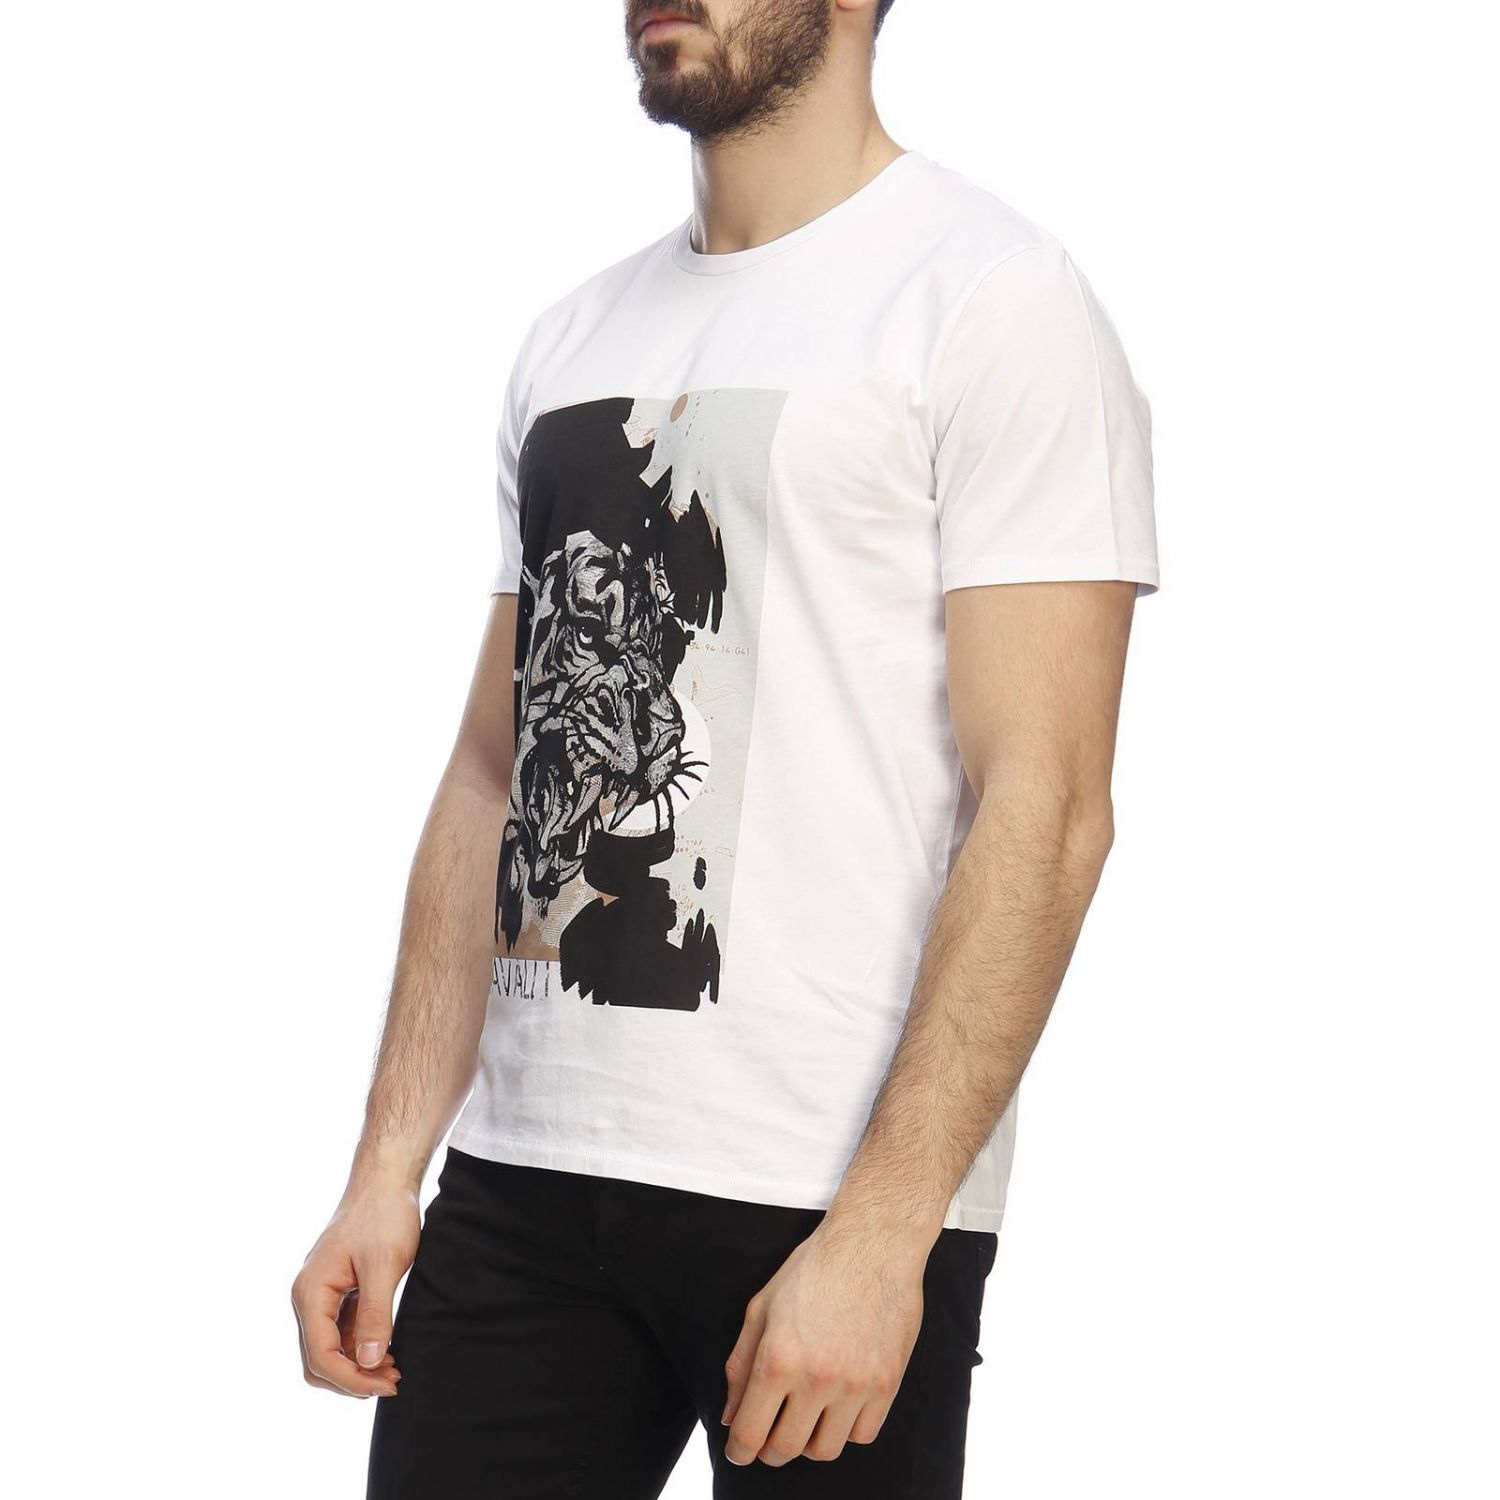 Just Cavalli Outlet: T-shirt men - White | T-Shirt Just Cavalli ...